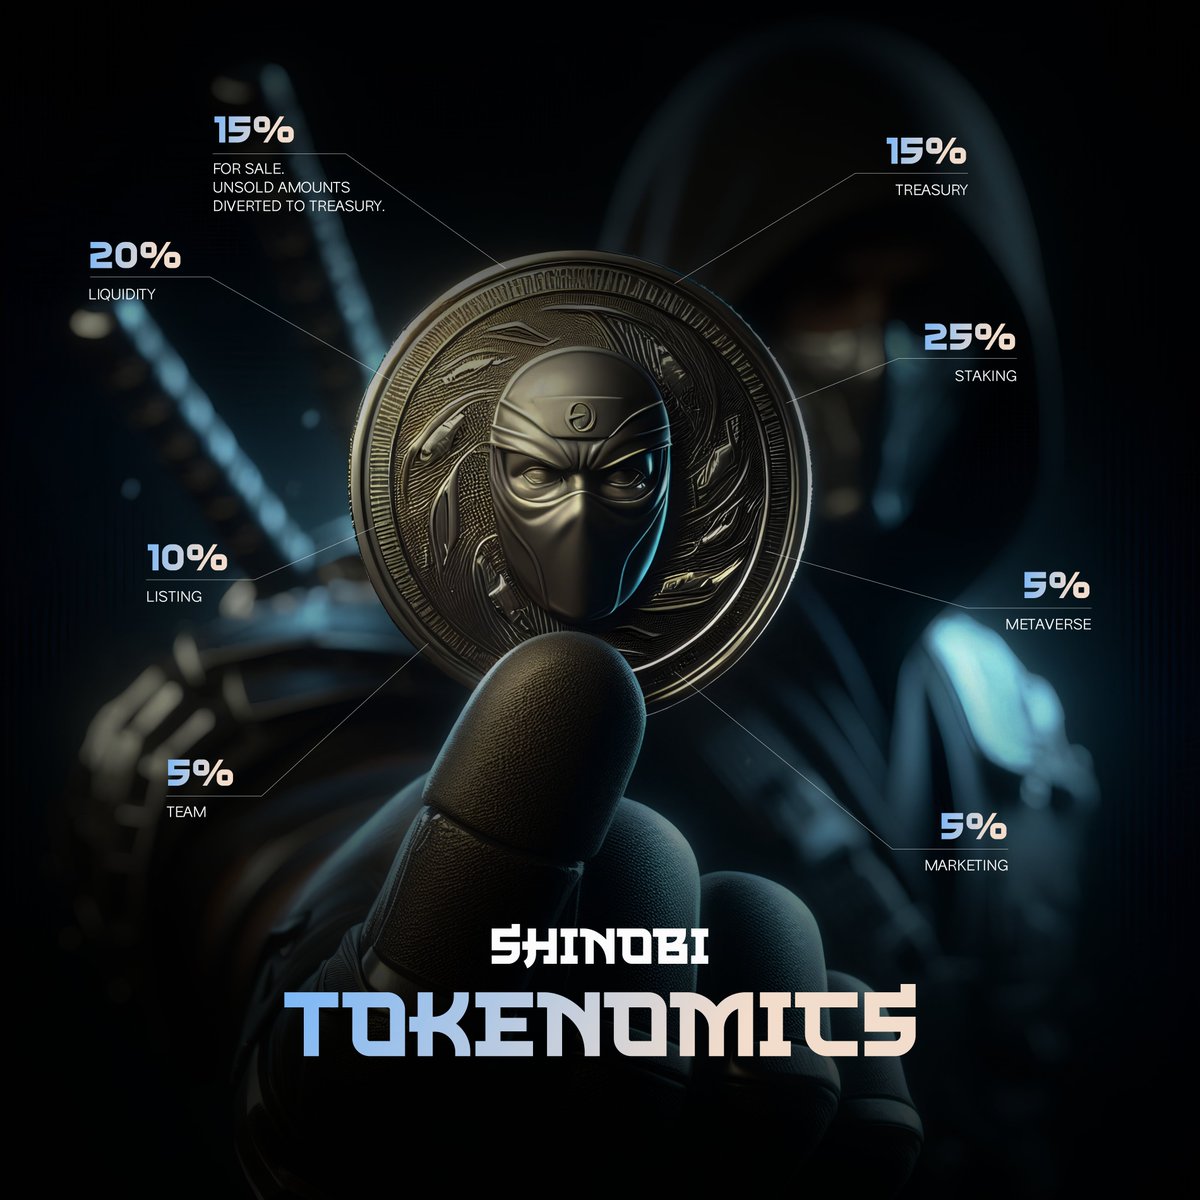 $SHO Tokenomics : •Total Supply : 1 billion. •25% - Staking. •20% - Liquidity. •15% - Treasury. •15% - For Sale . Unsold amounts directed to treasury. •10% - Listings. •5% - Marketing. •5% - Metaverse. •5% - Team. #SHI20 #SHINOBI